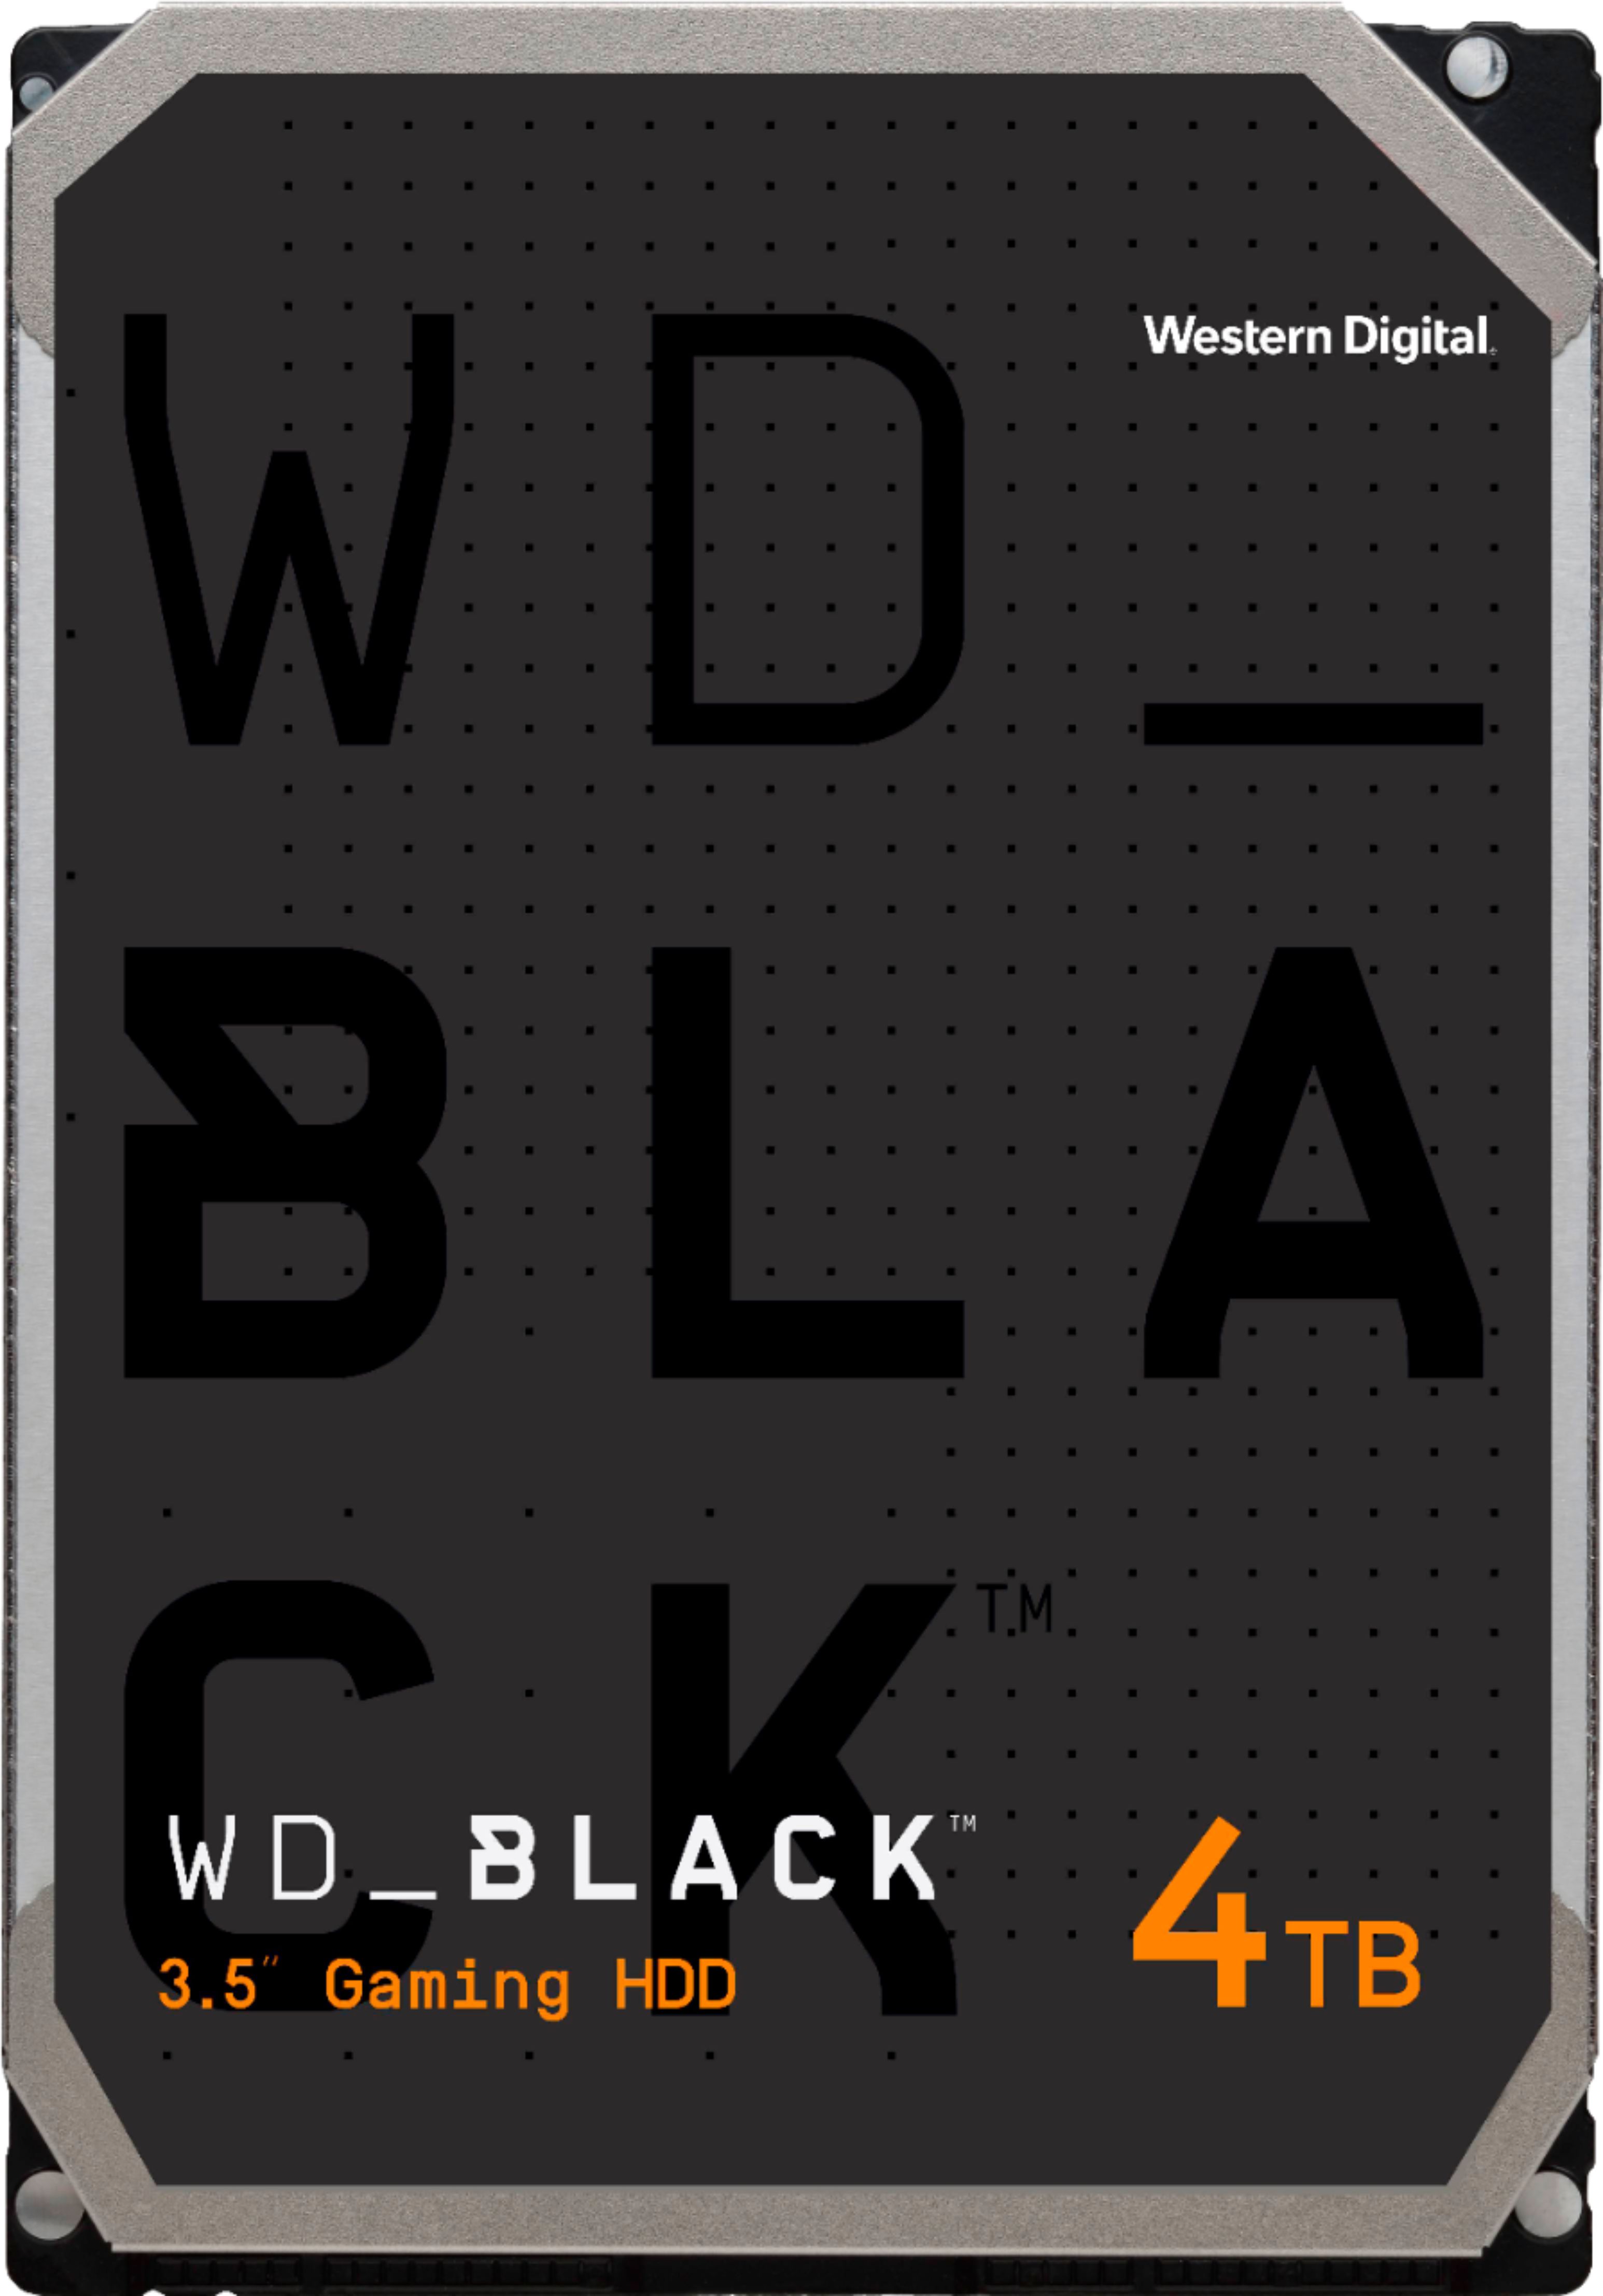 WD - WD_BLACK Gaming 4TB Internal SATA Hard Drive for Desktops